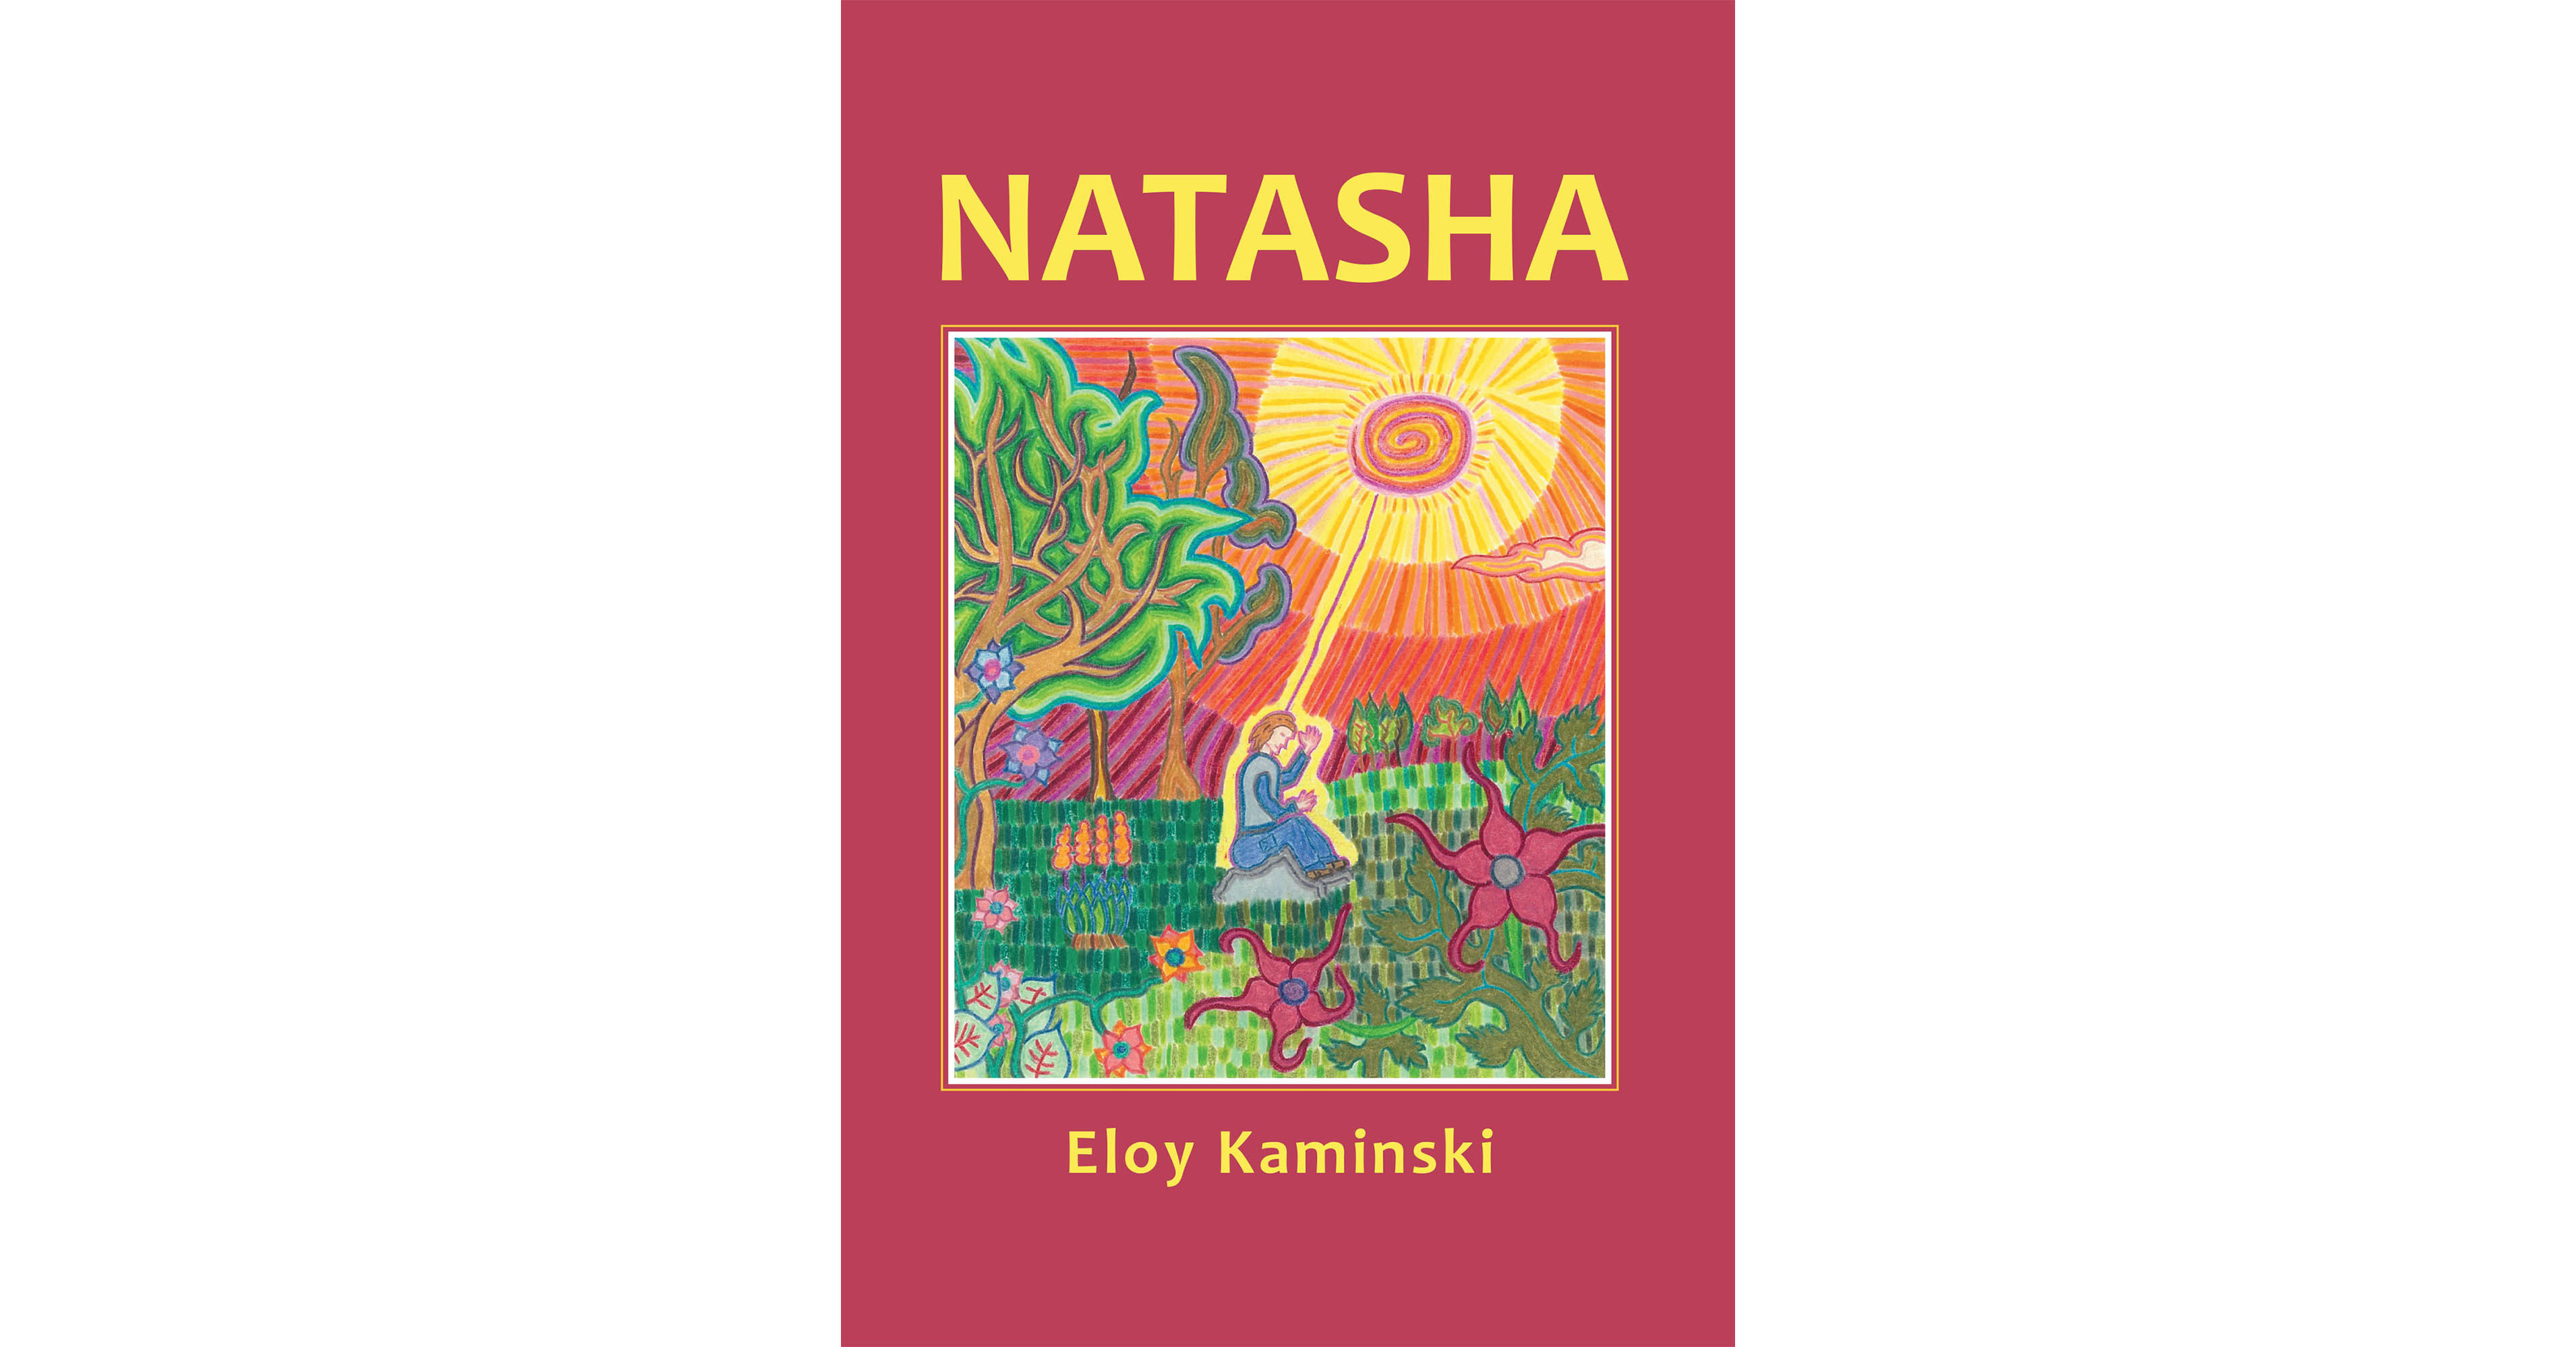 Frontlist | Eloy Kaminski presents his new book, NATASHA, a collection of short stories.